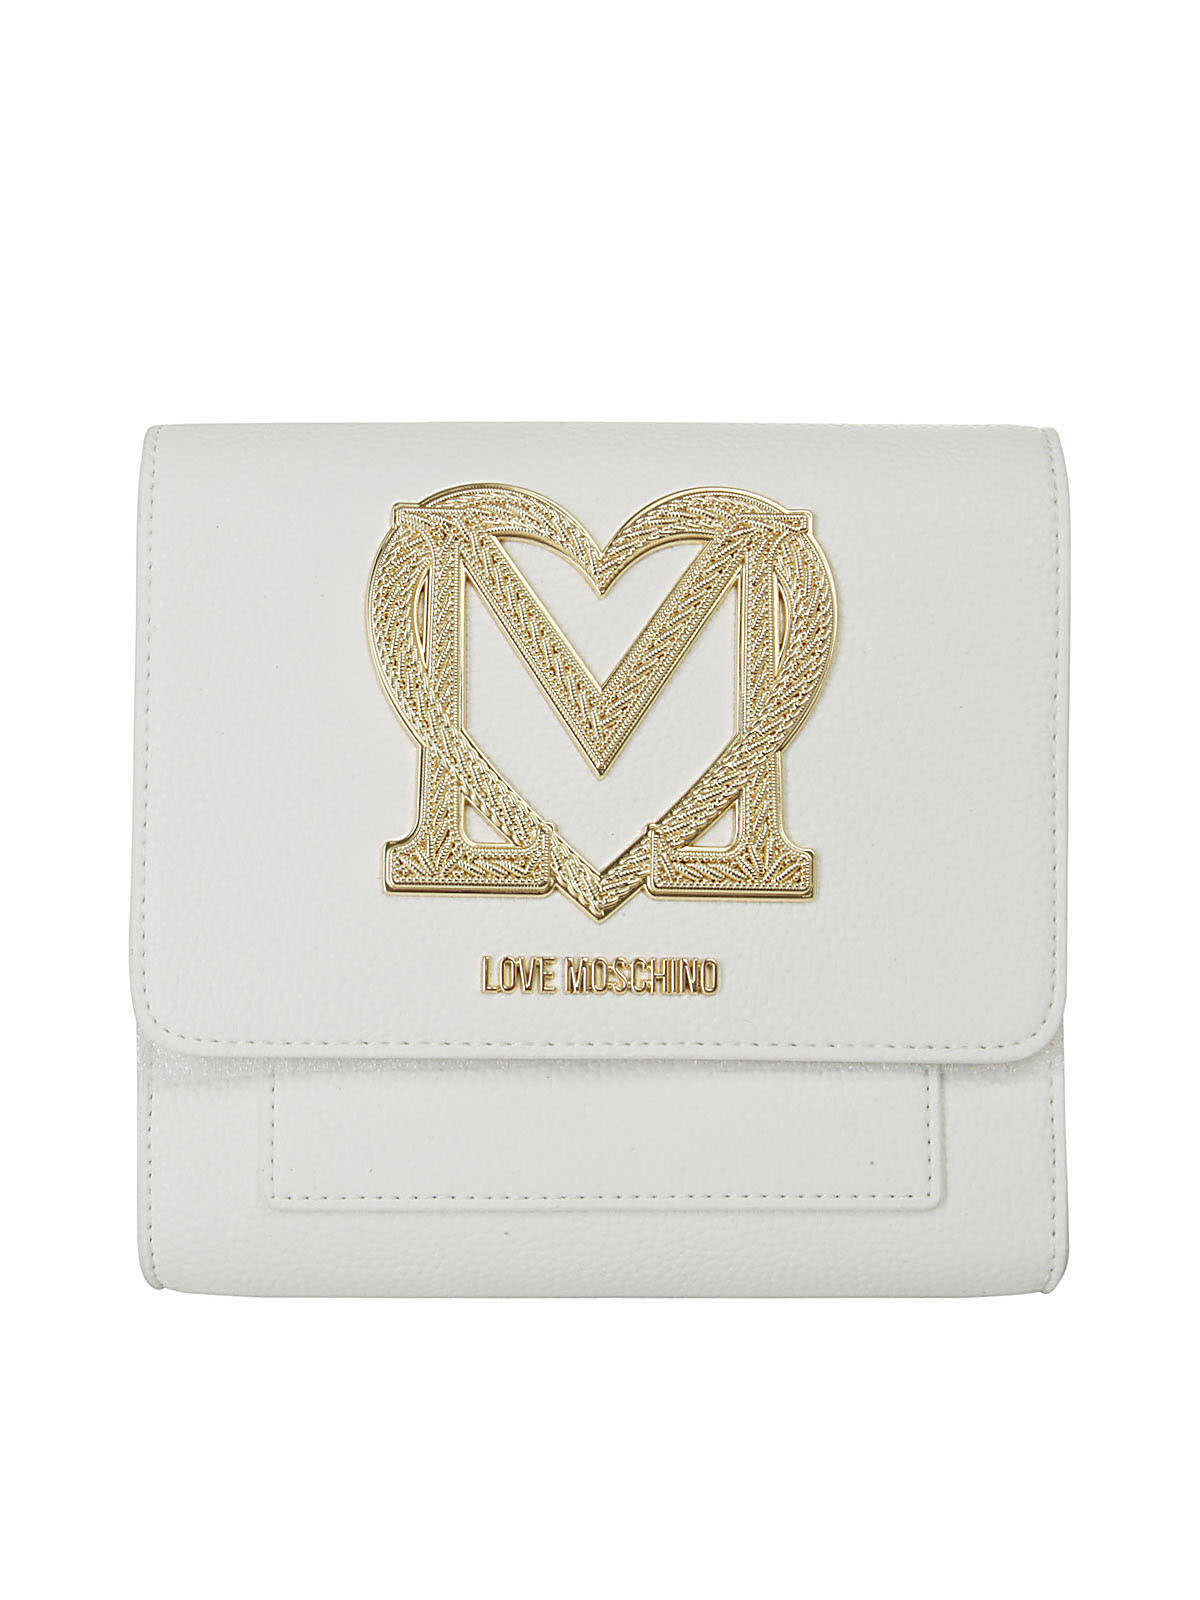 Love Moschino Pu Bag in white